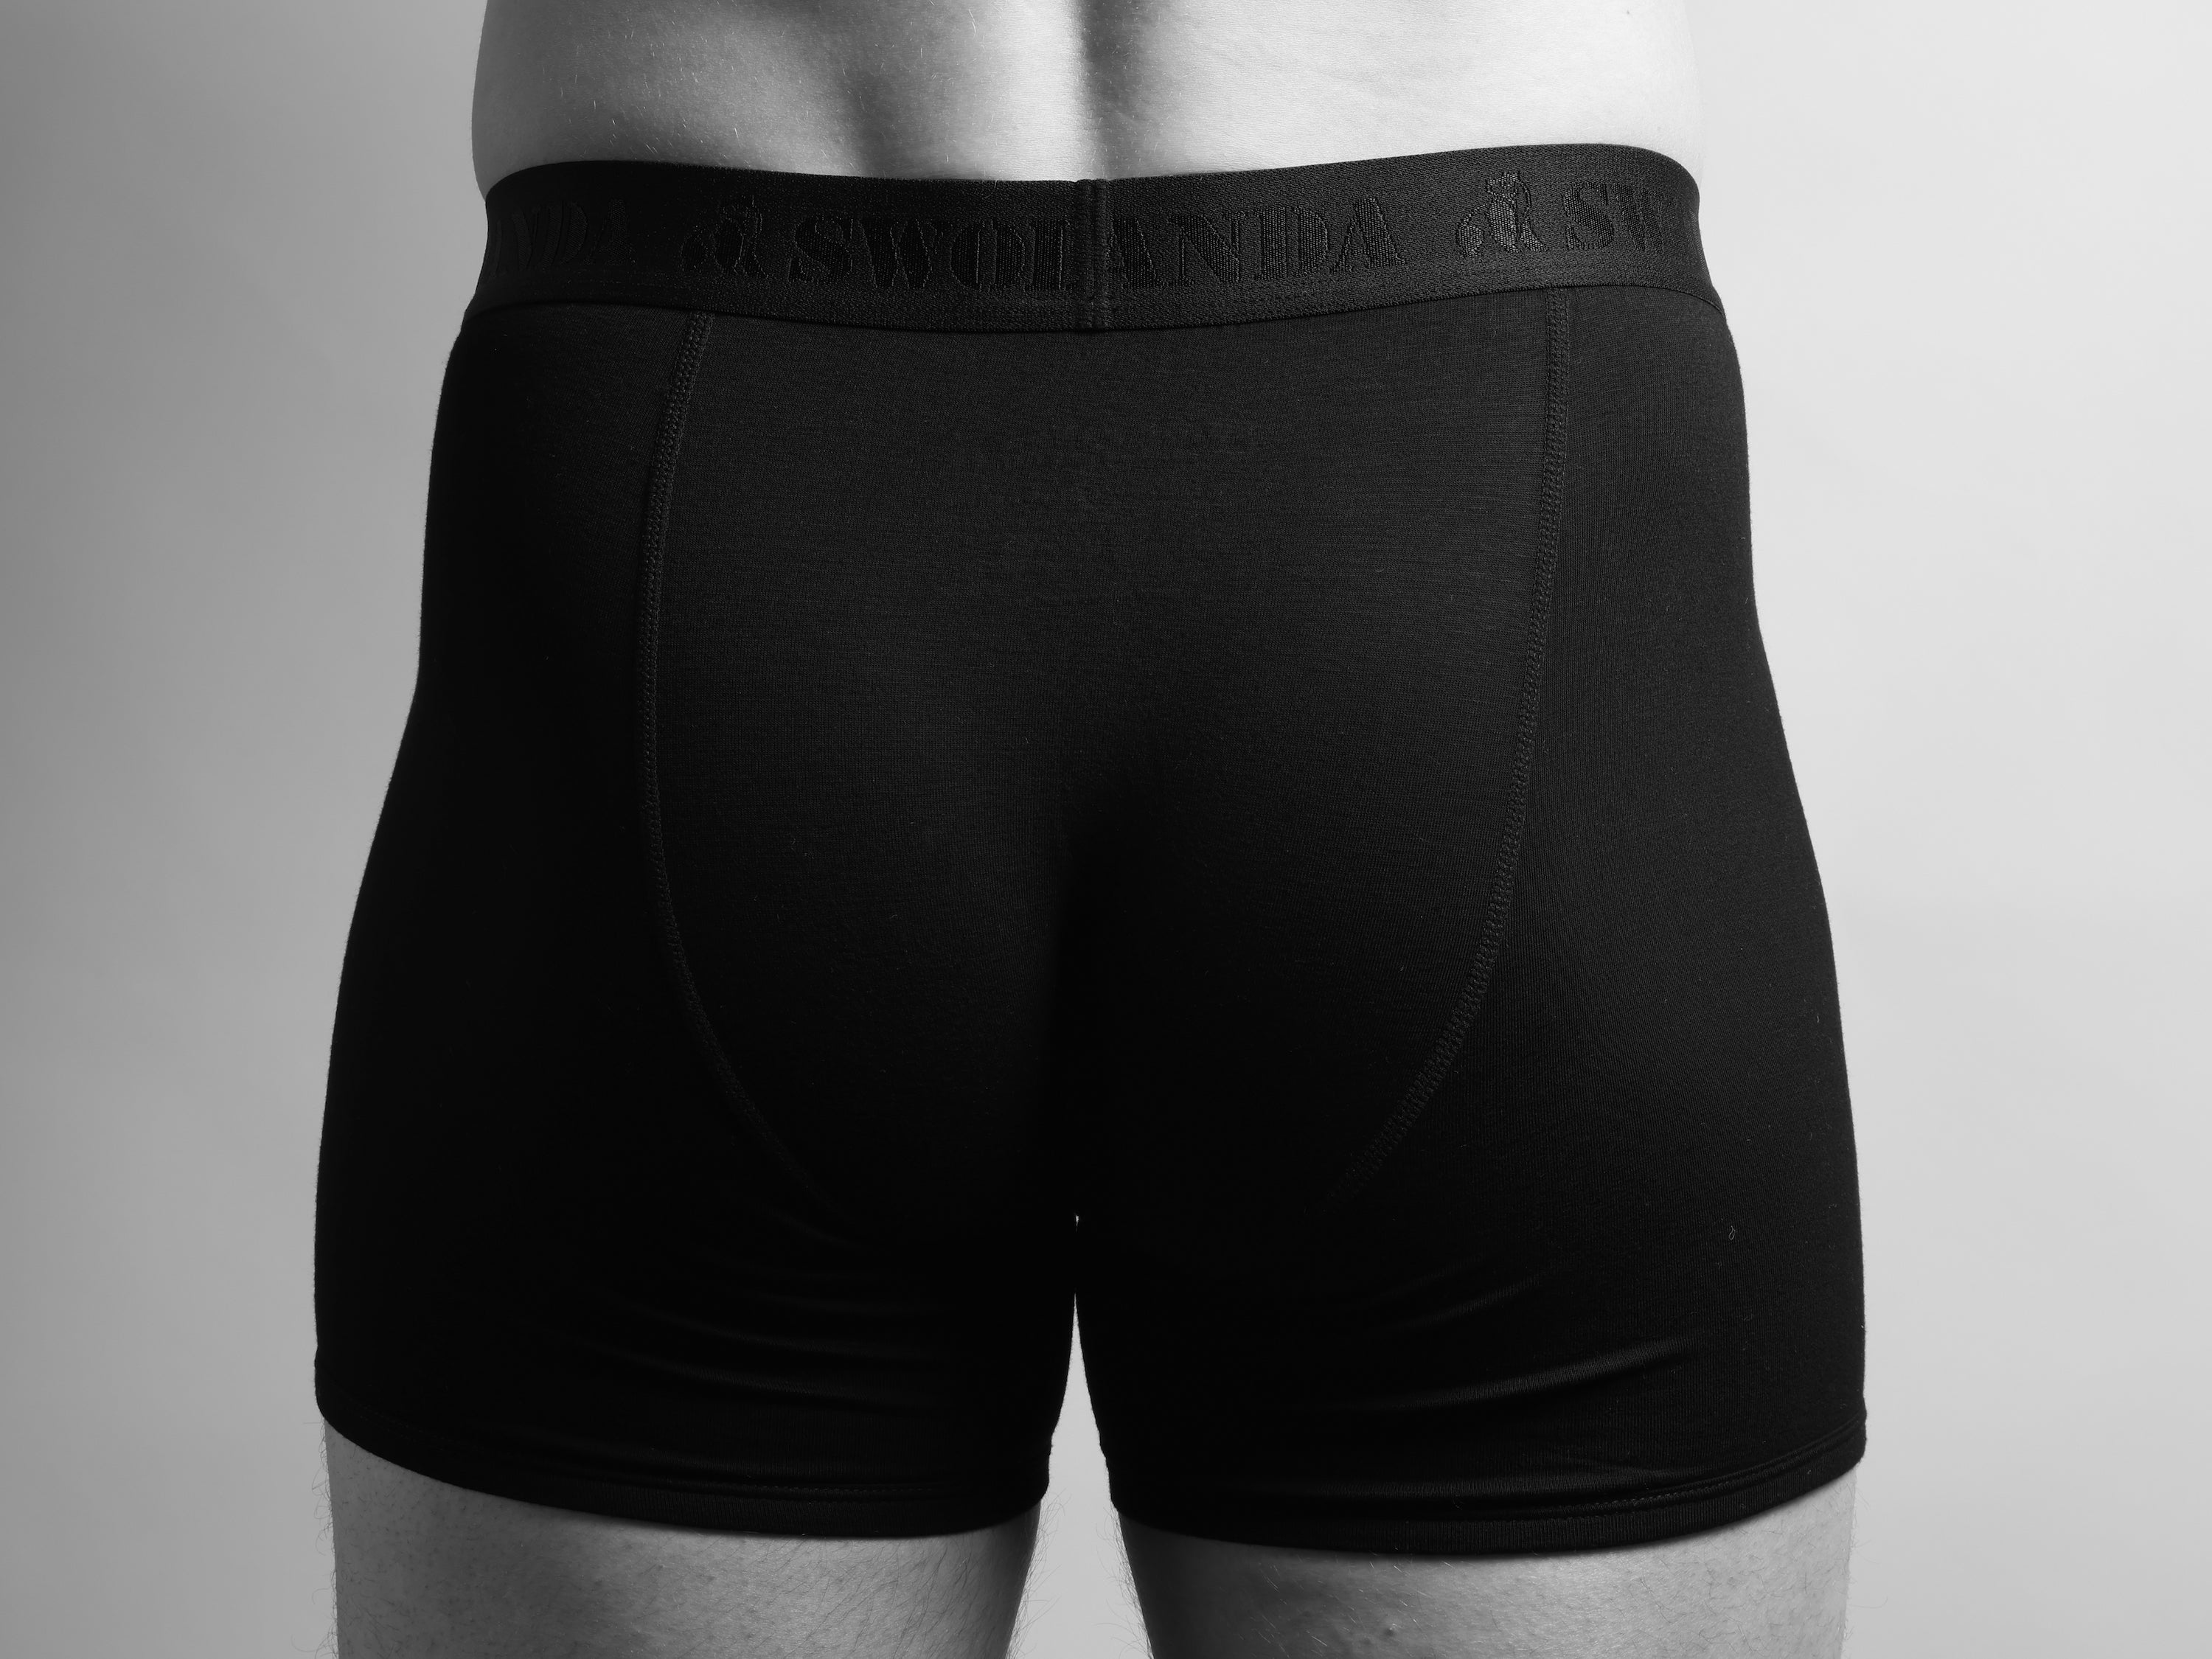 underwear-bamboo-boxers-black-black-band-2_c8013bbb-1d31-4769-bca7-5505f2f1a717.jpg